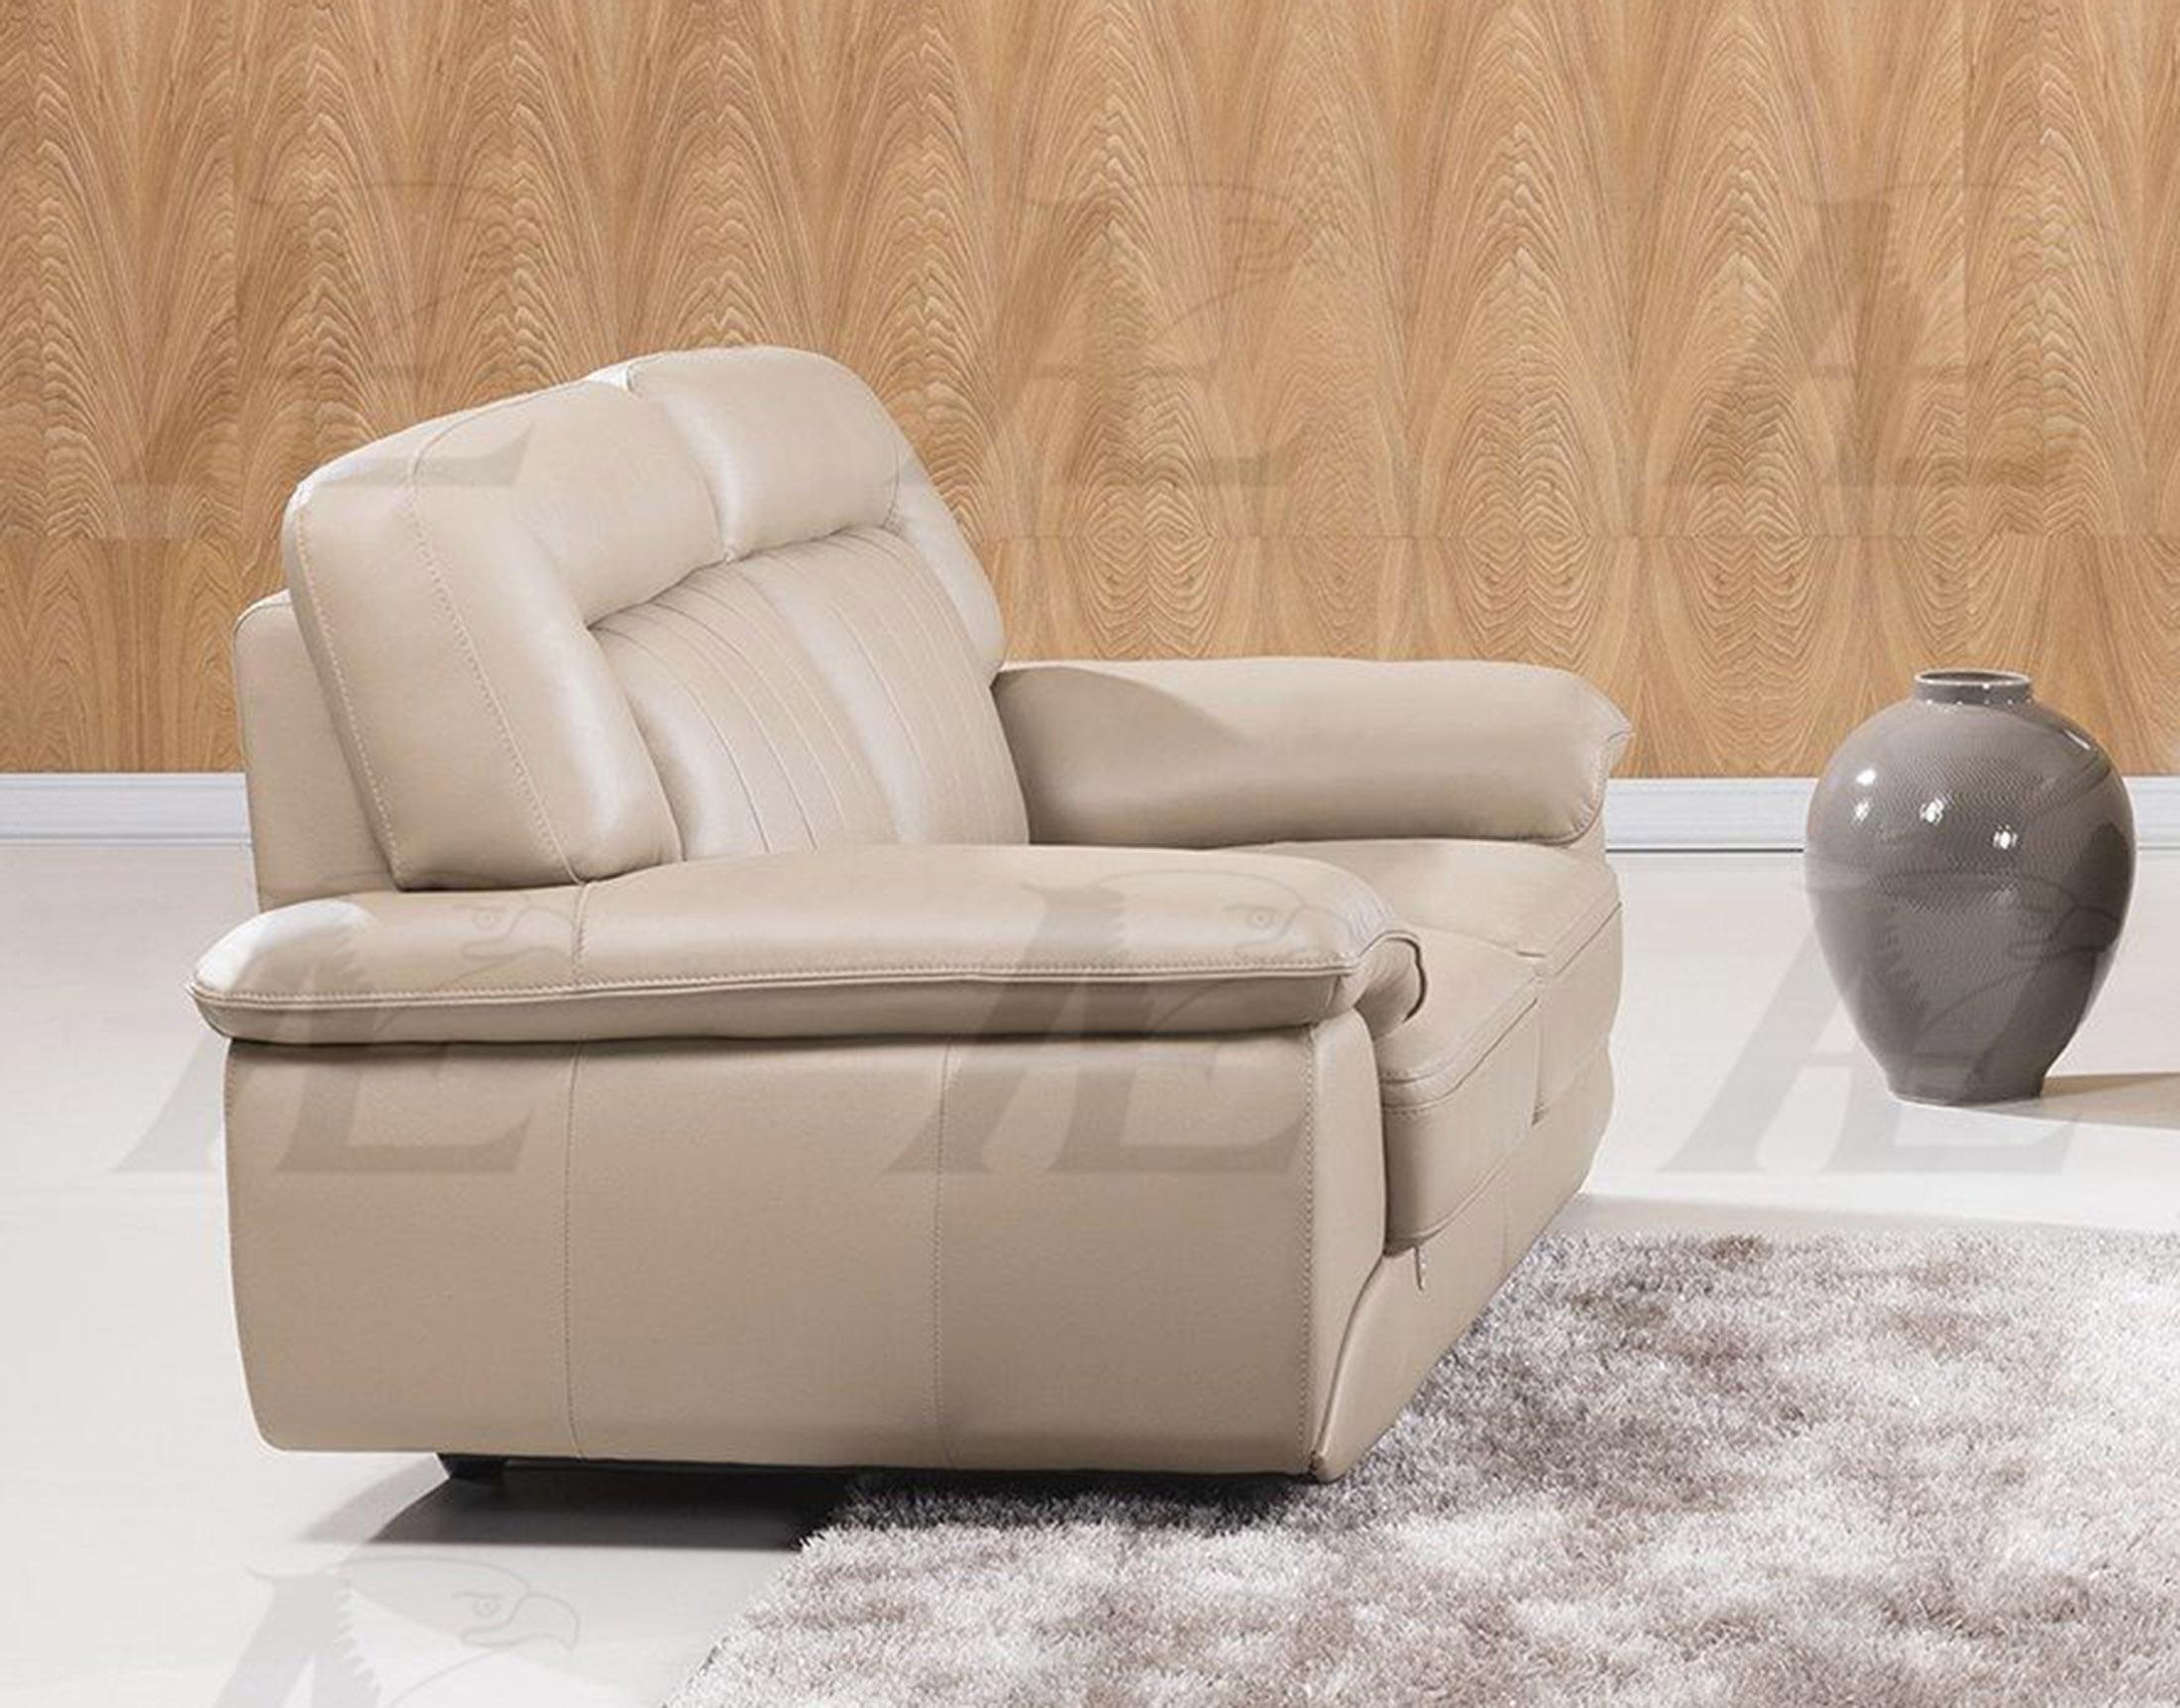 

                    
American Eagle Furniture EK072-TAN Sofa and Loveseat Set Tan Italian Leather Purchase 
